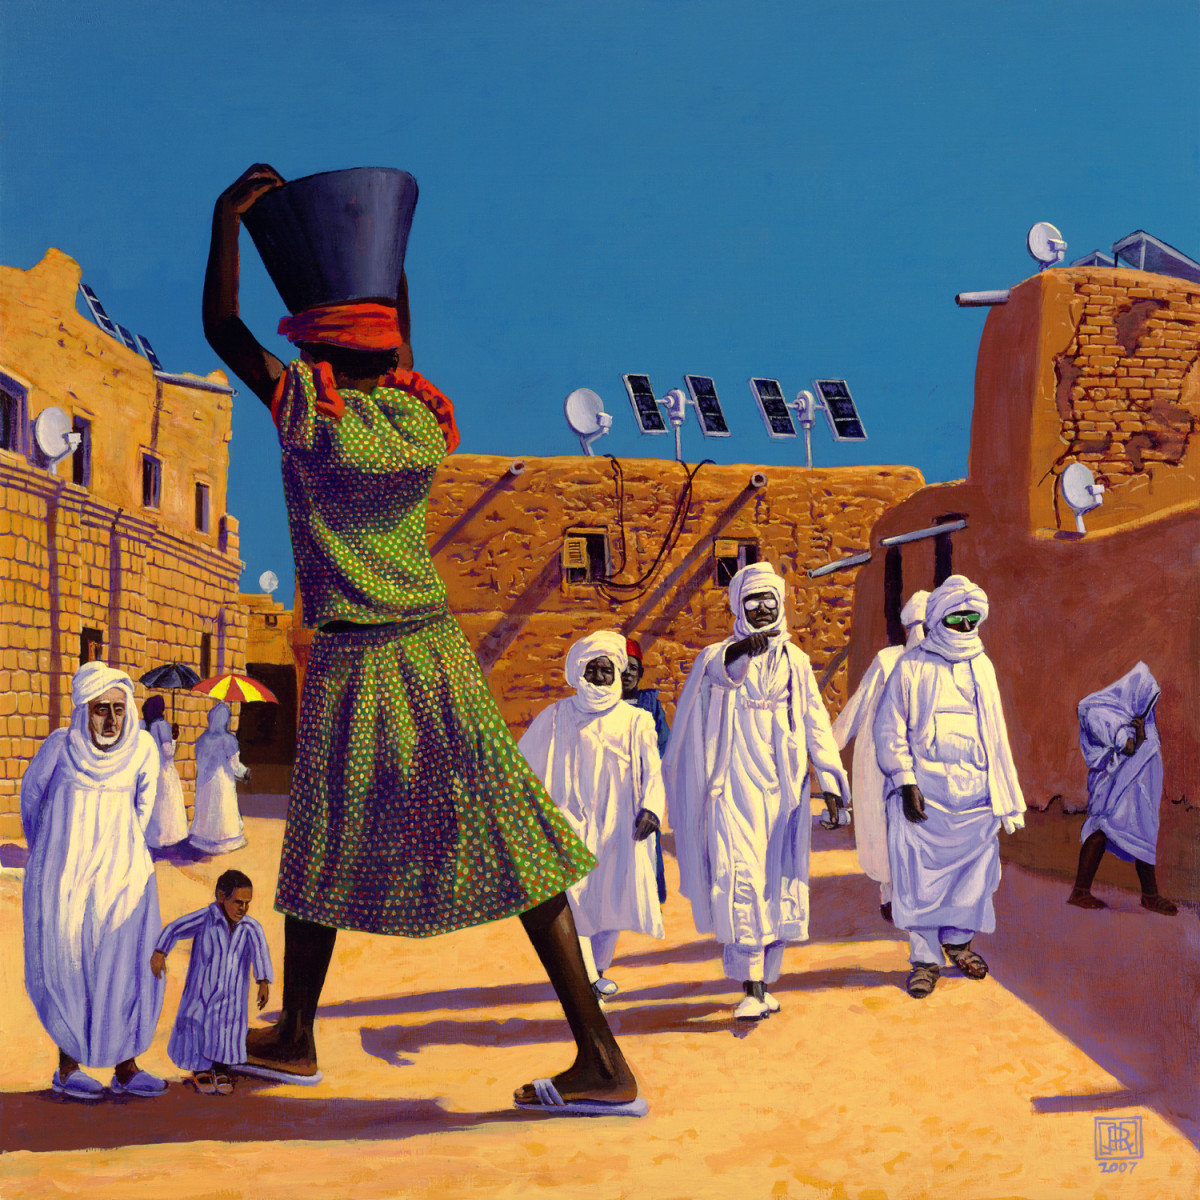 Agadez by Jeff Jordan, Limited Edition print from original acrylic painting.